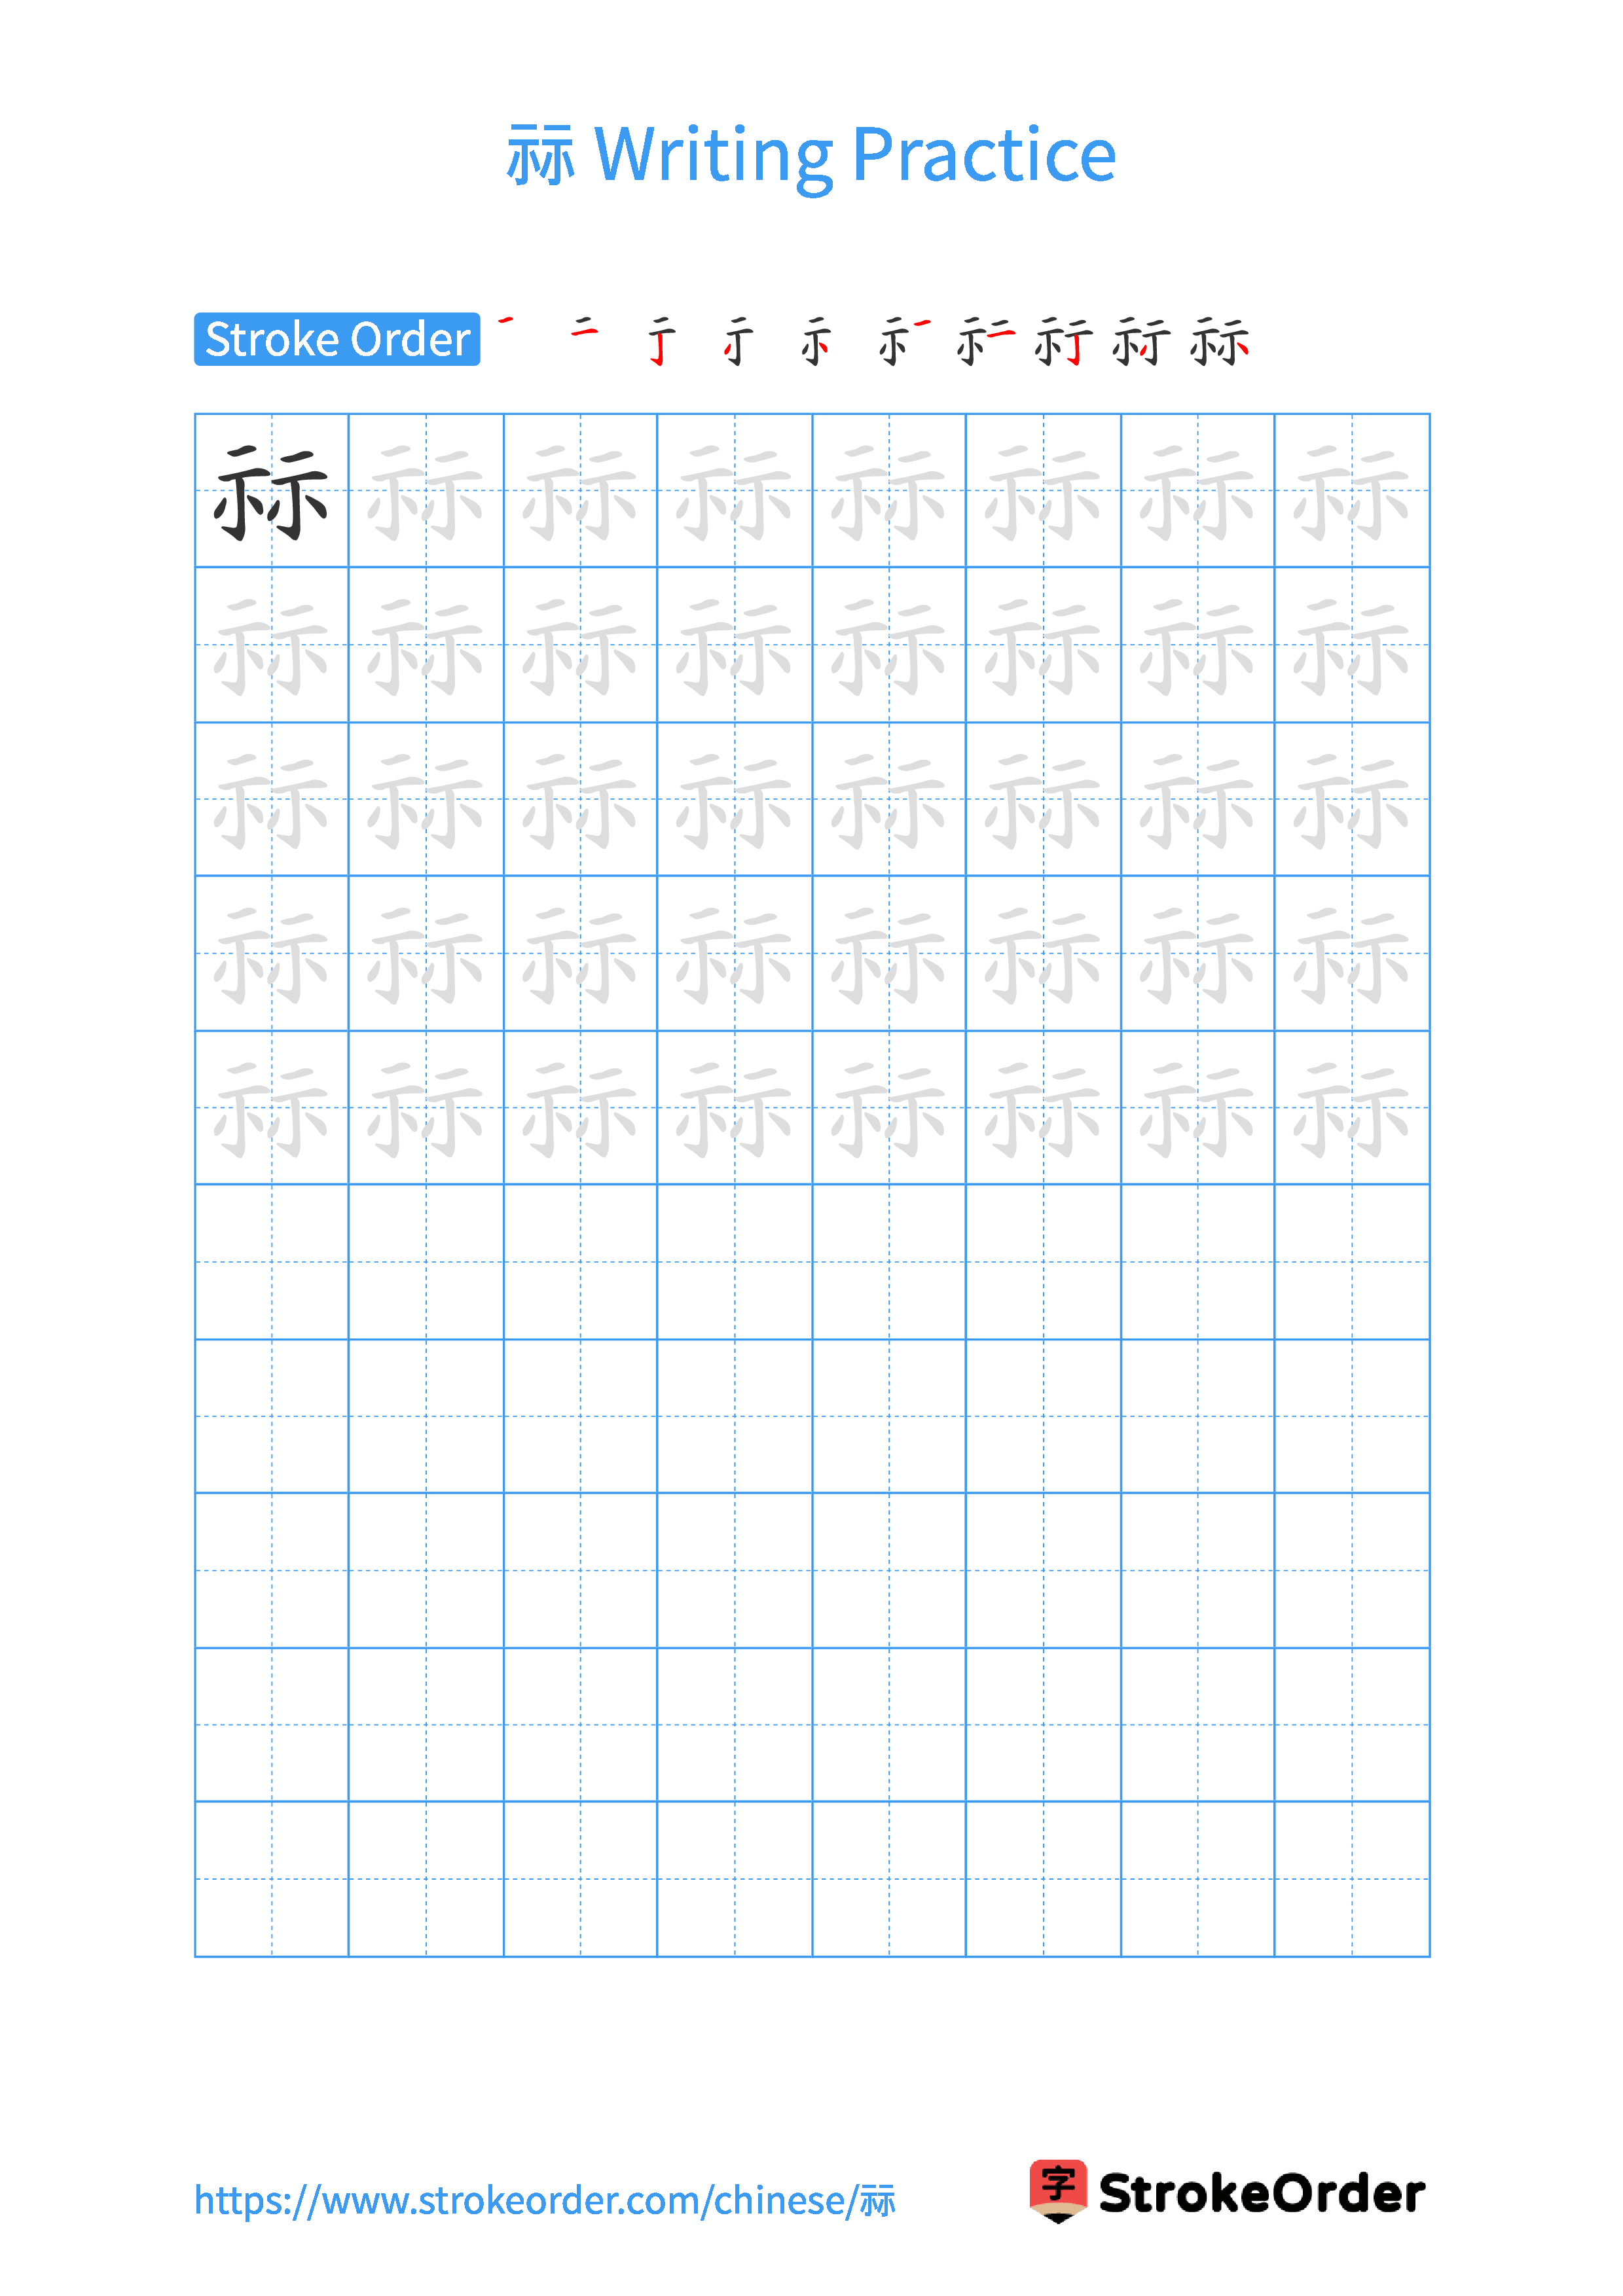 Printable Handwriting Practice Worksheet of the Chinese character 祘 in Portrait Orientation (Tian Zi Ge)